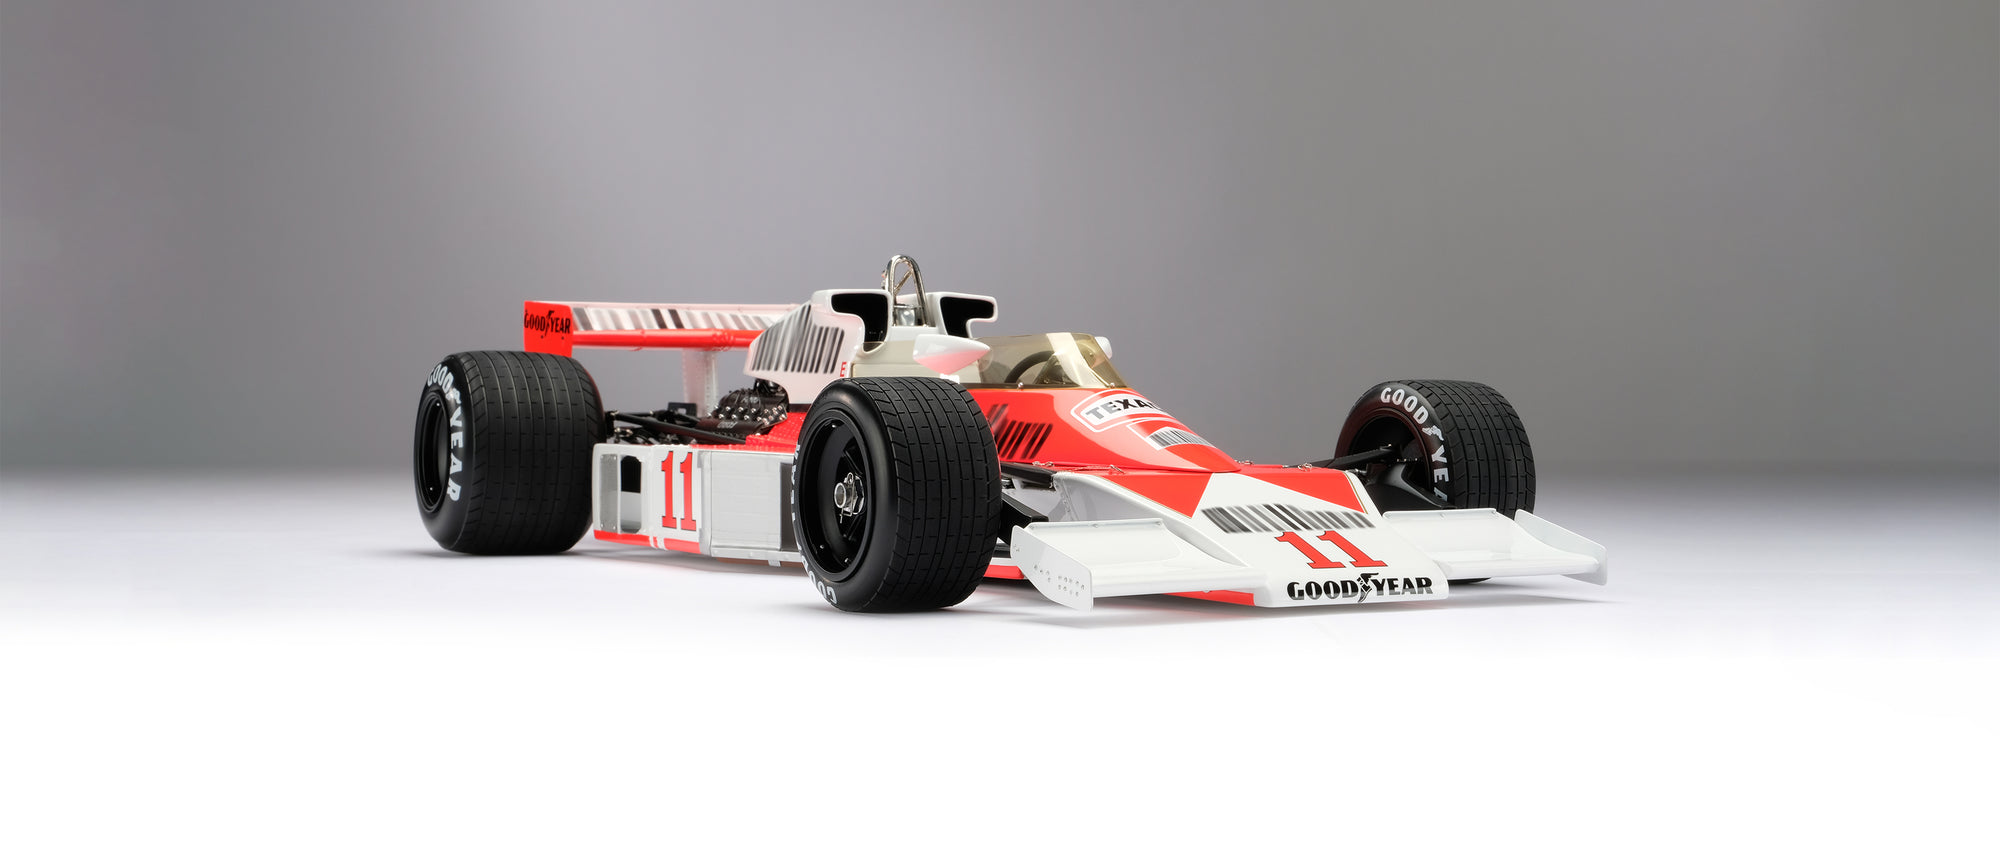 McLaren M23D - 1976 Japanese GP